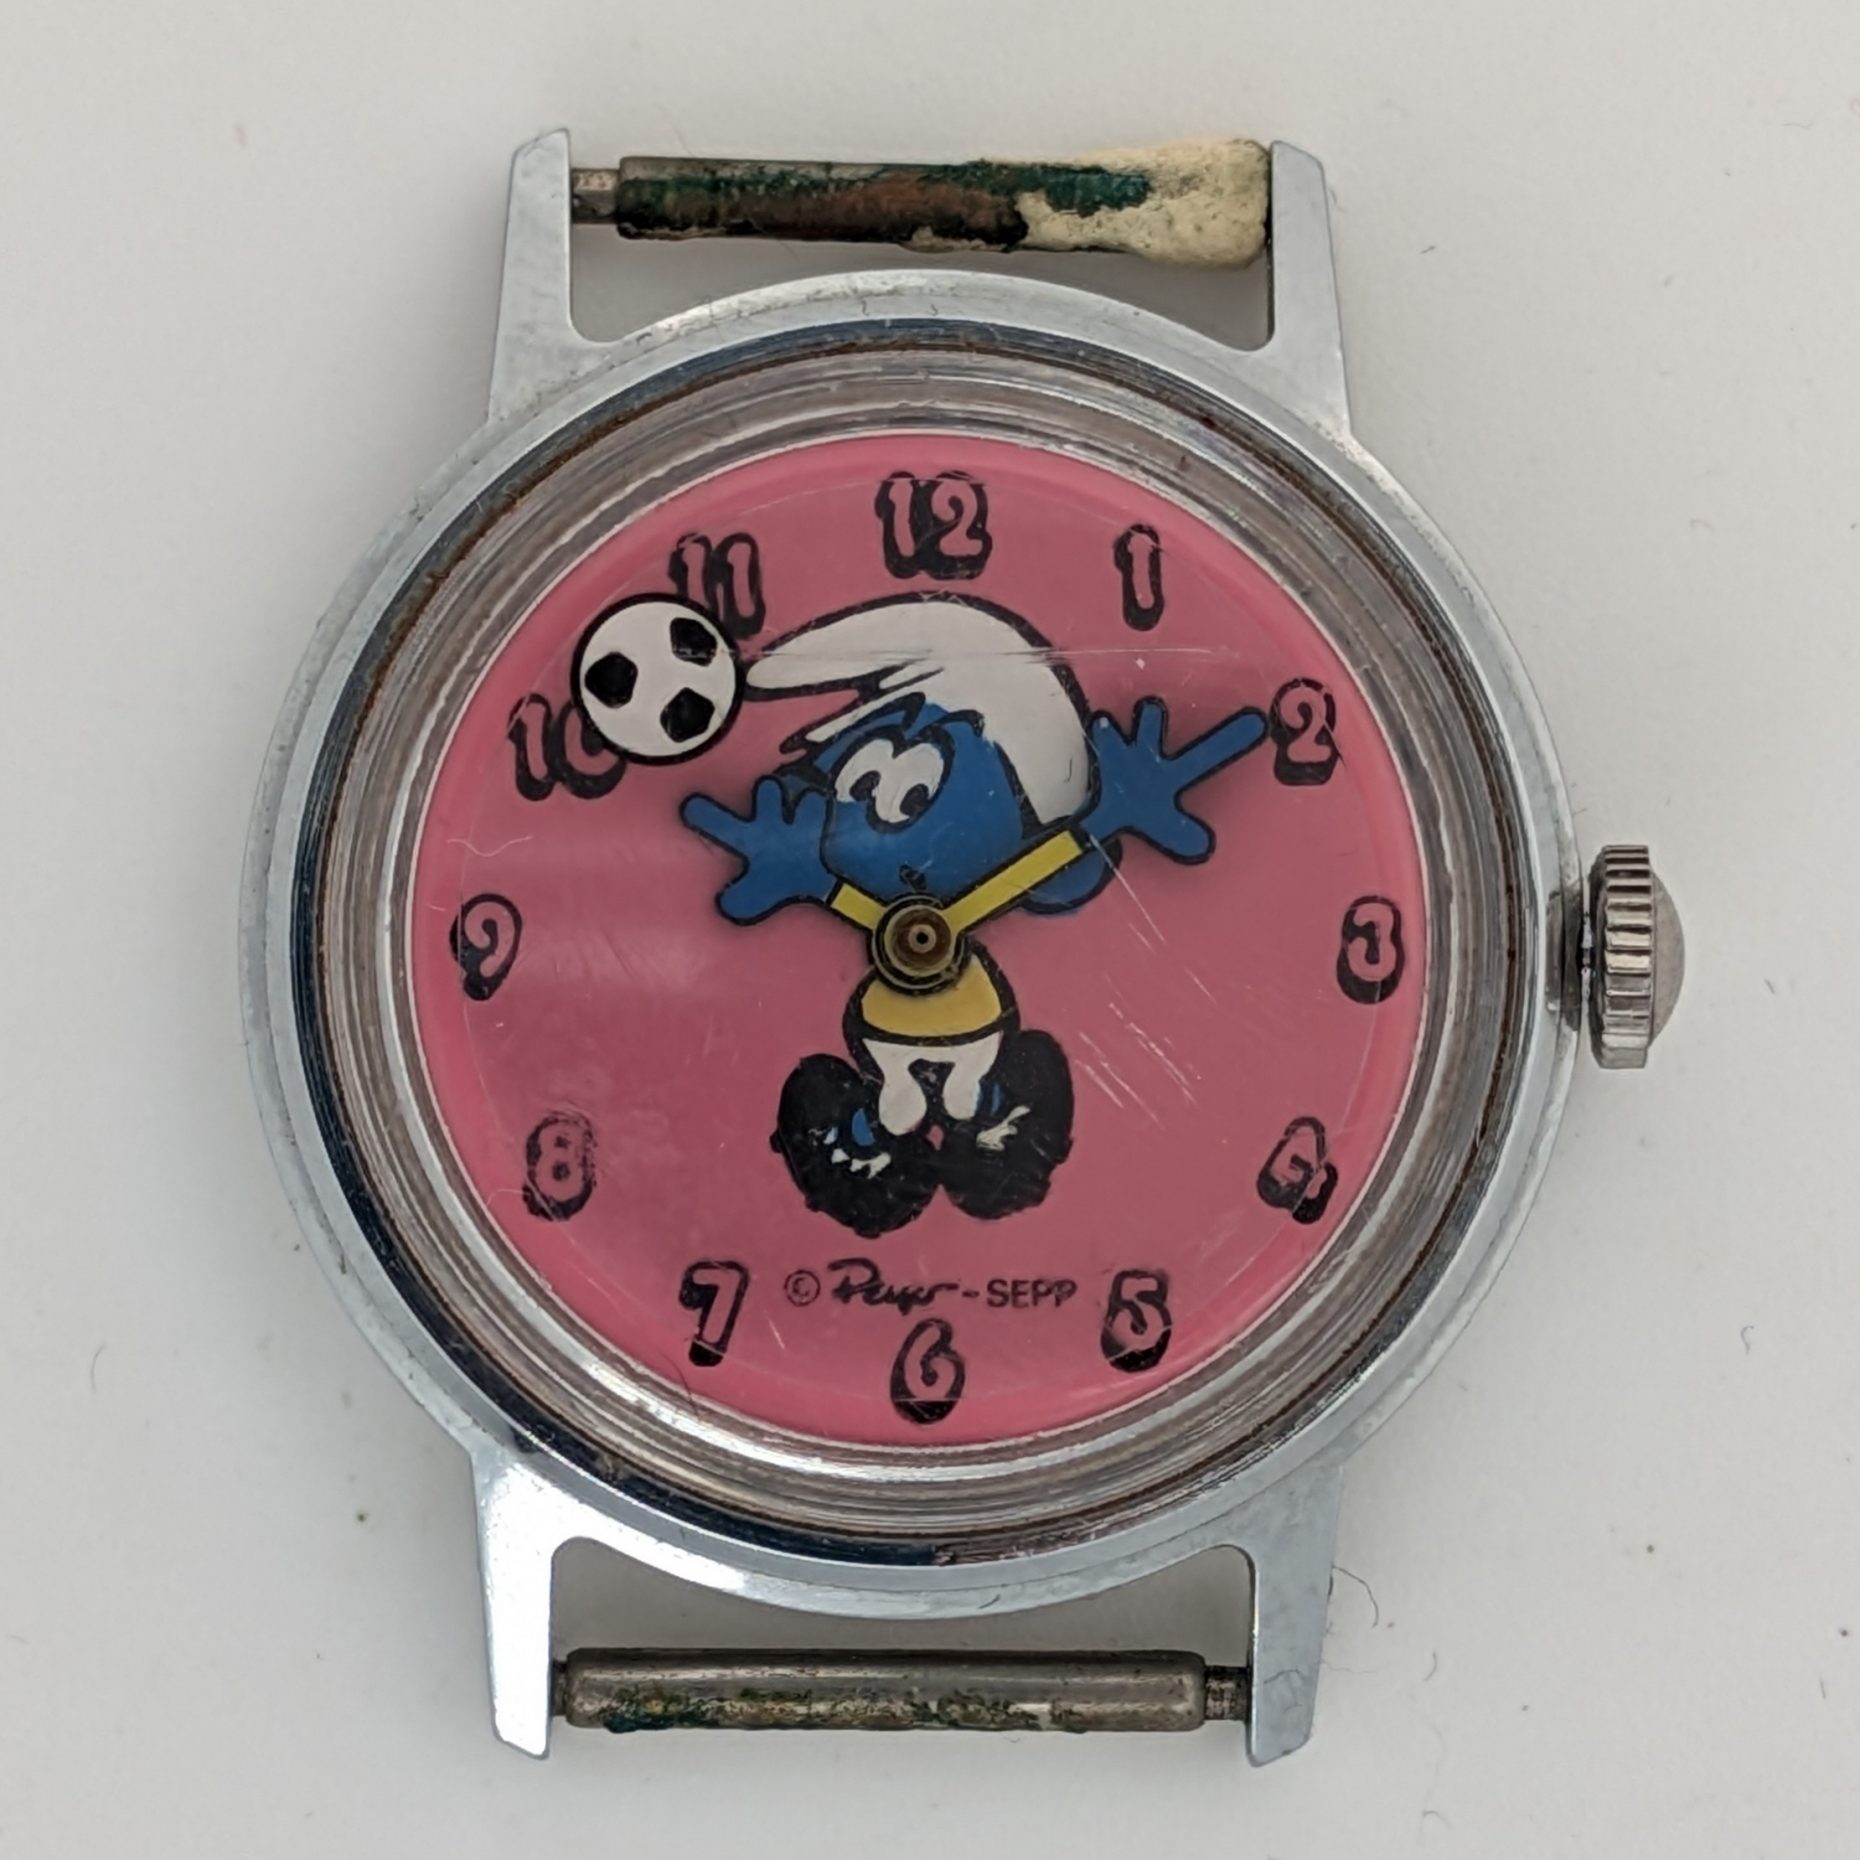 Timex Striker Smurf 39231 02478 [1978] Character